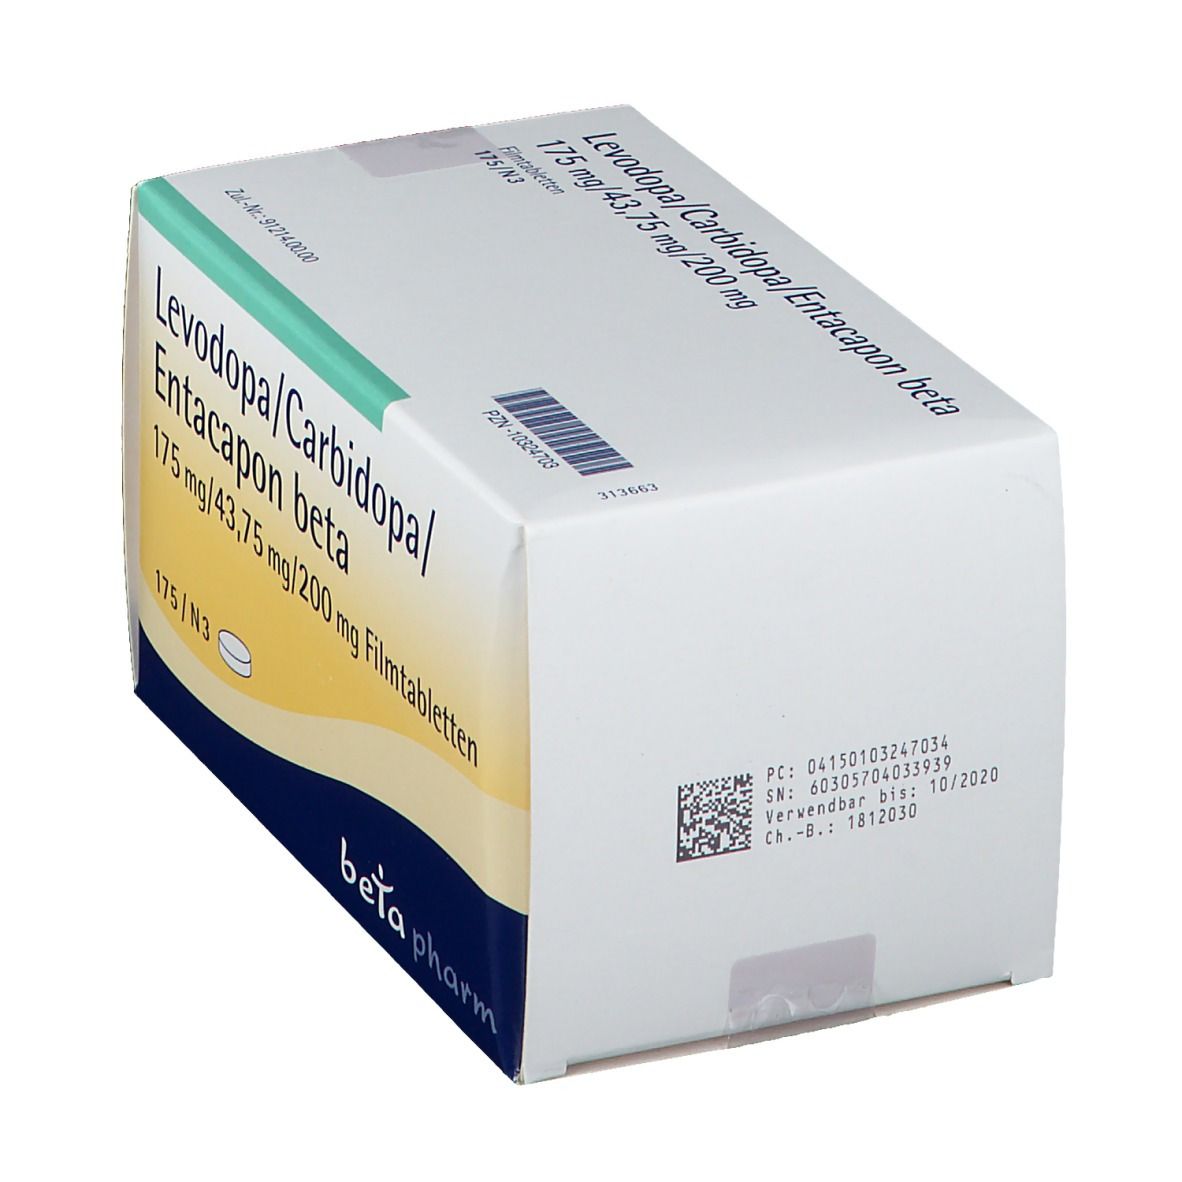 Levodopa/Carbidopa/Entacapon beta 175 mg/43,75 mg/200 mg